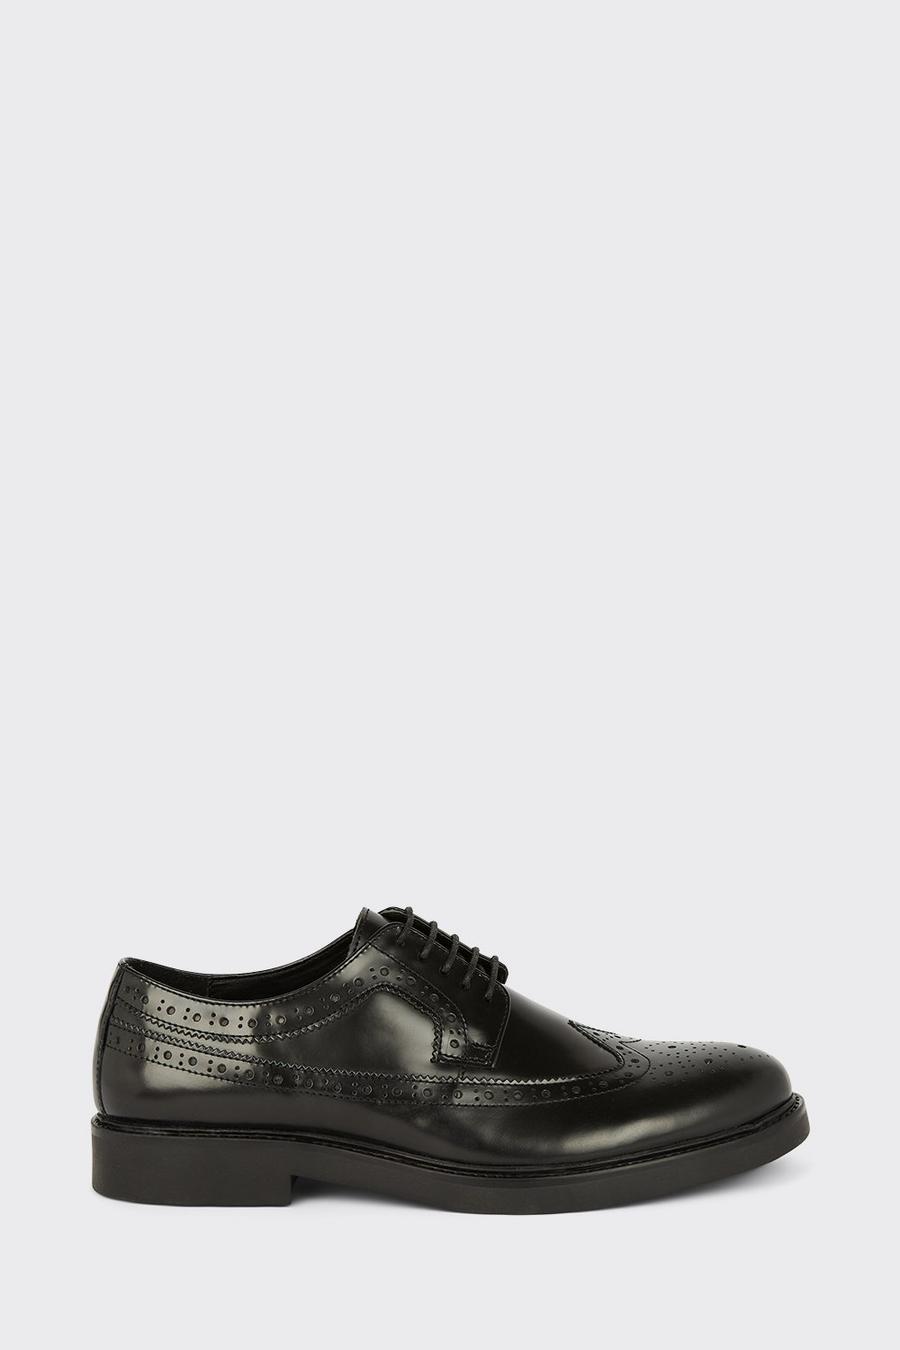 Black Leather Smart Derby Brogue Shoes